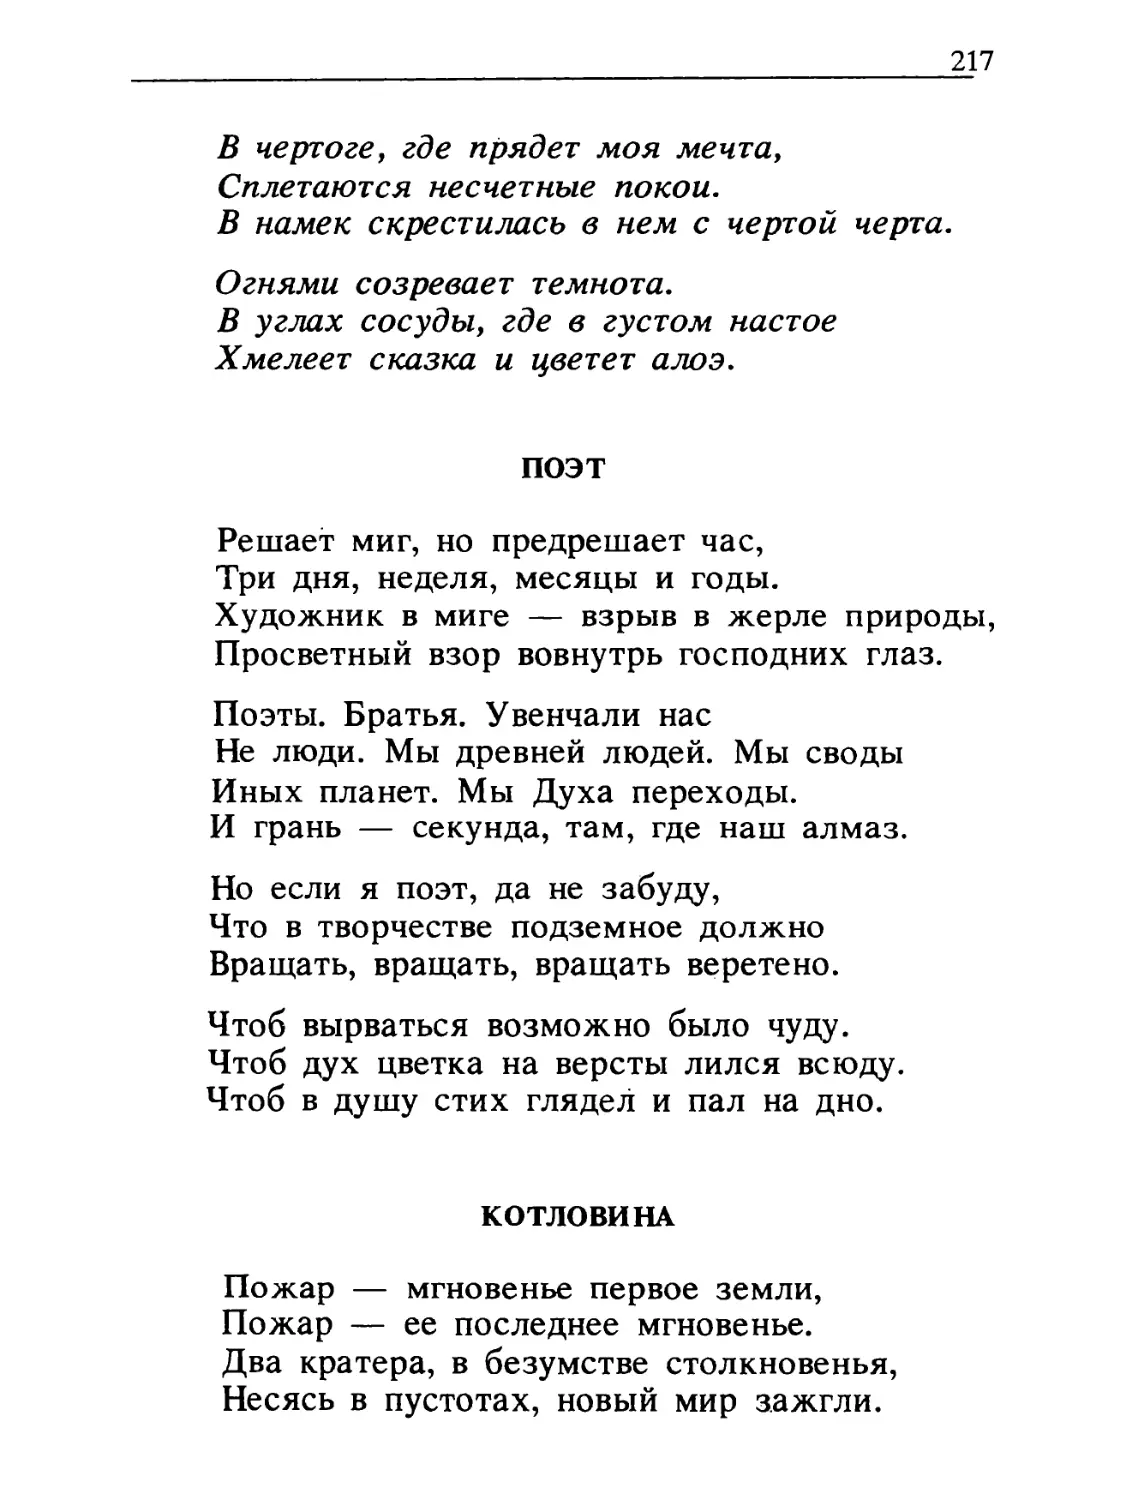 Поэт
Котловина